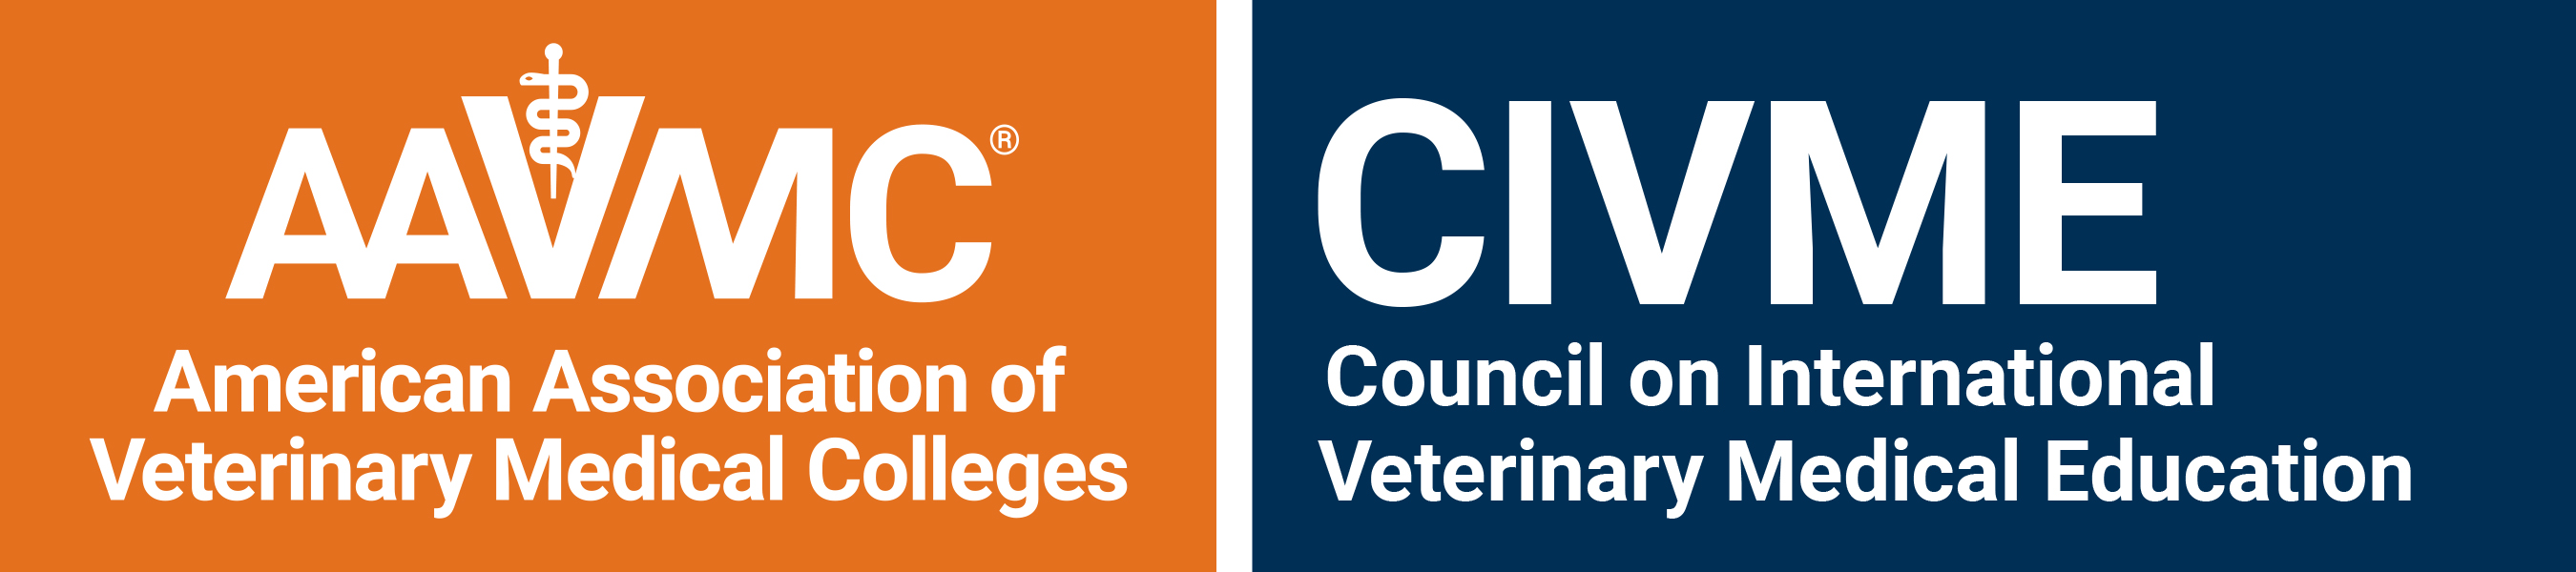 Council on International Veterinary Medical Education (CIVME)